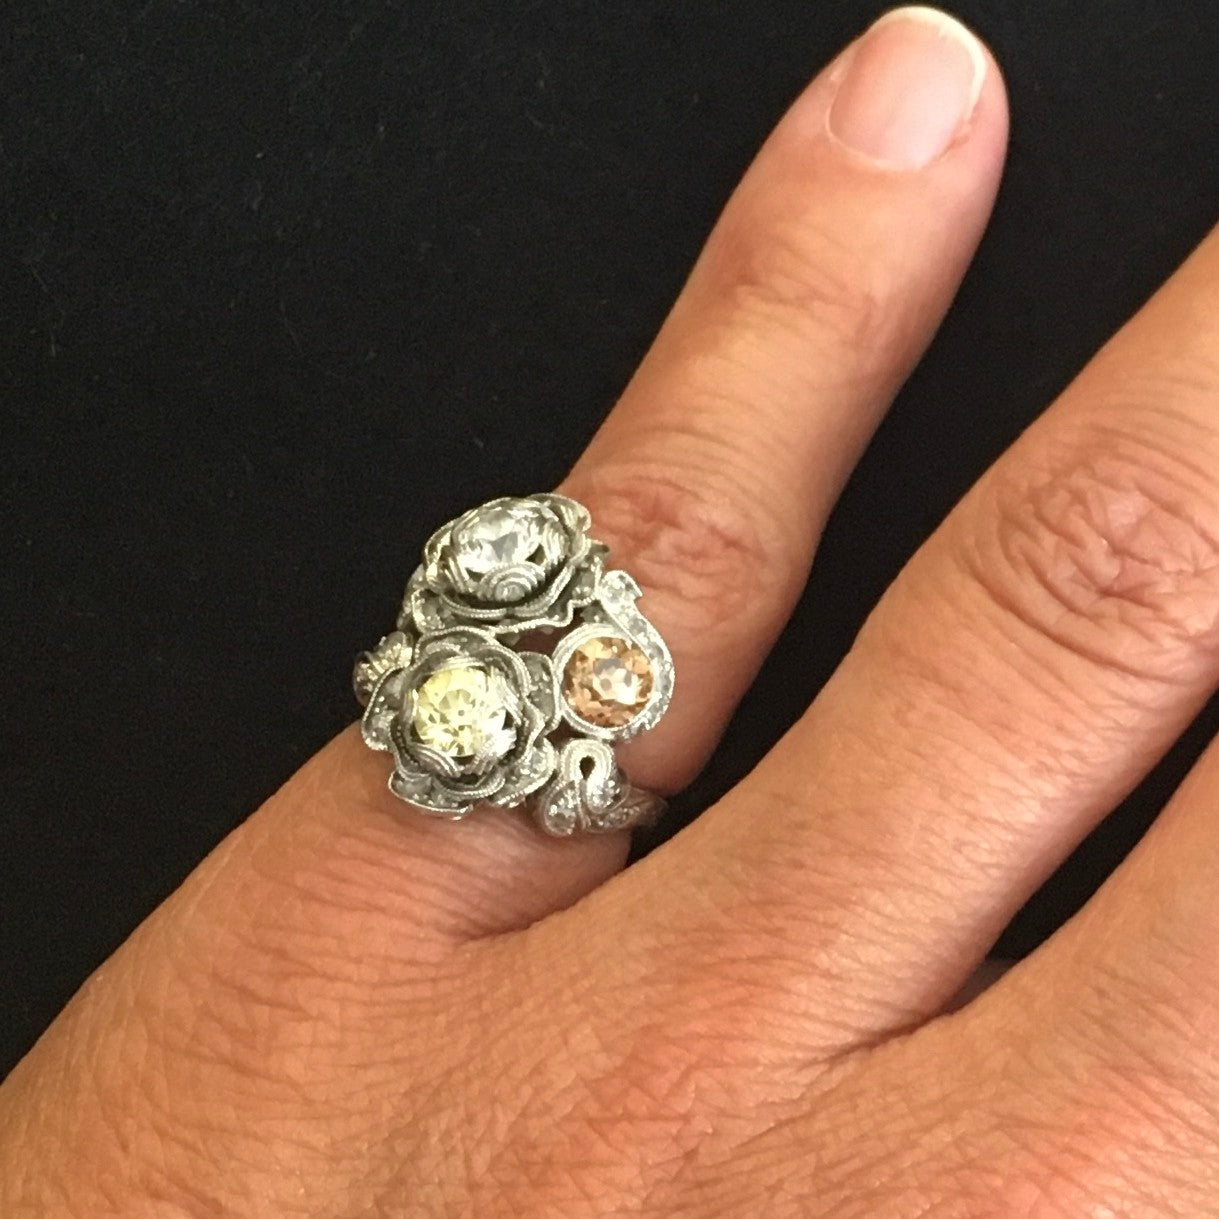 French Edwardian Platinum Diamond Ring worn on finger